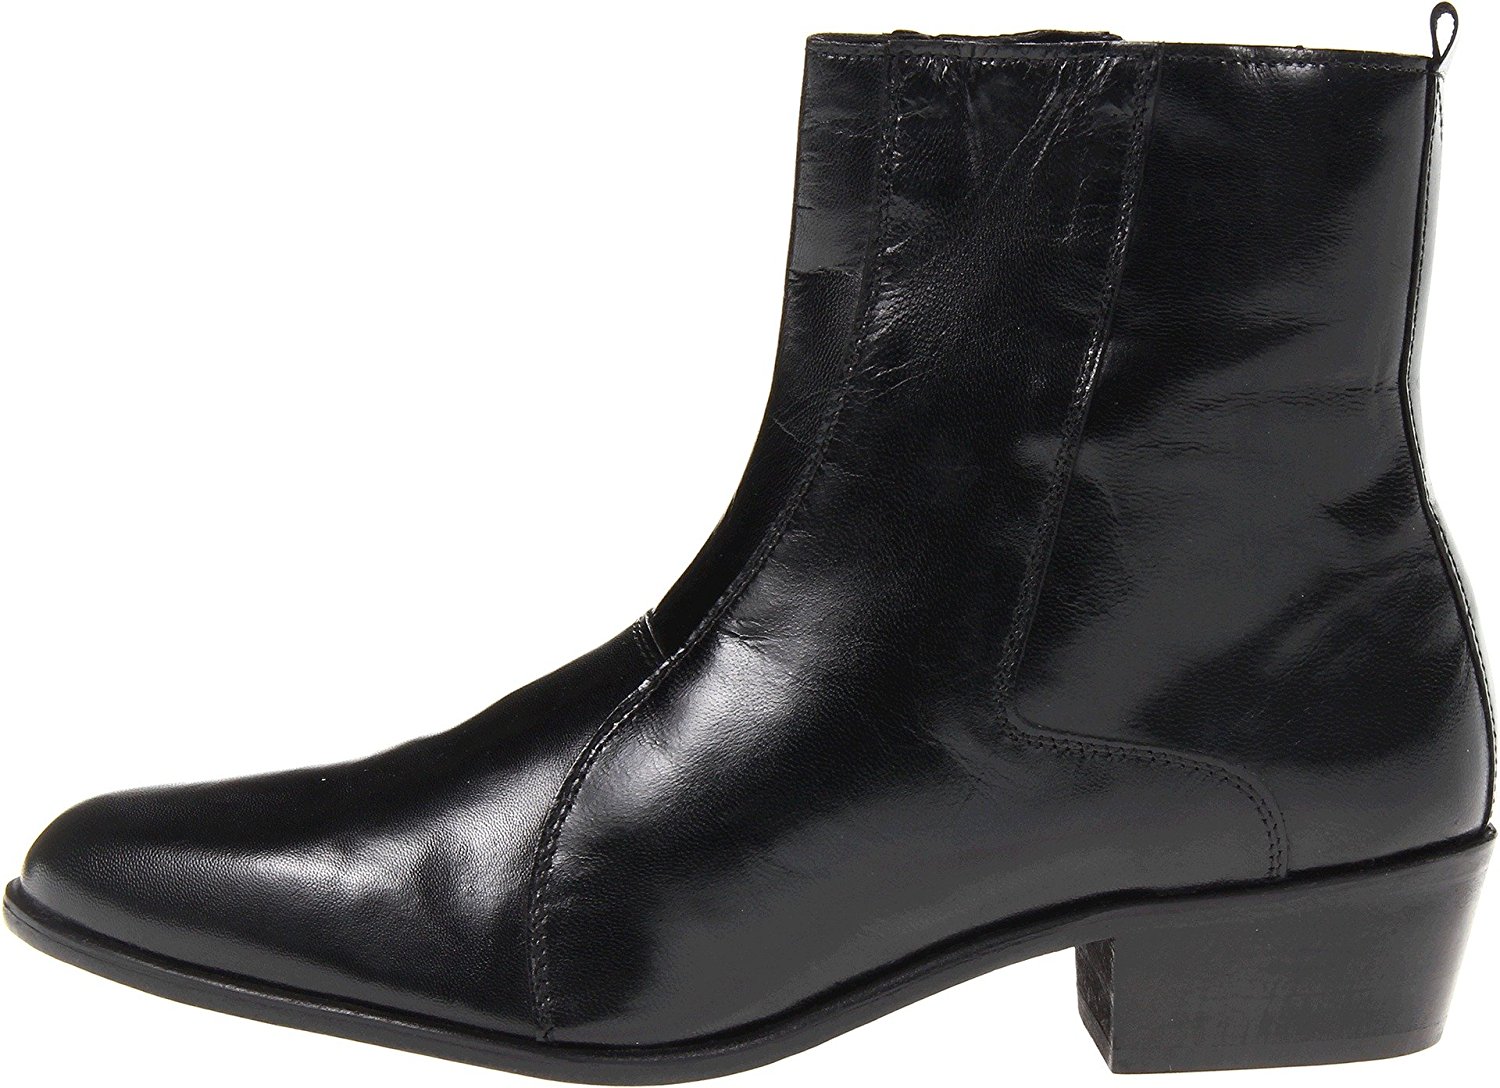 Stacy Adams Mens santos Almond Toe Ankle Fashion Boots, Black, Size 9.5 ...